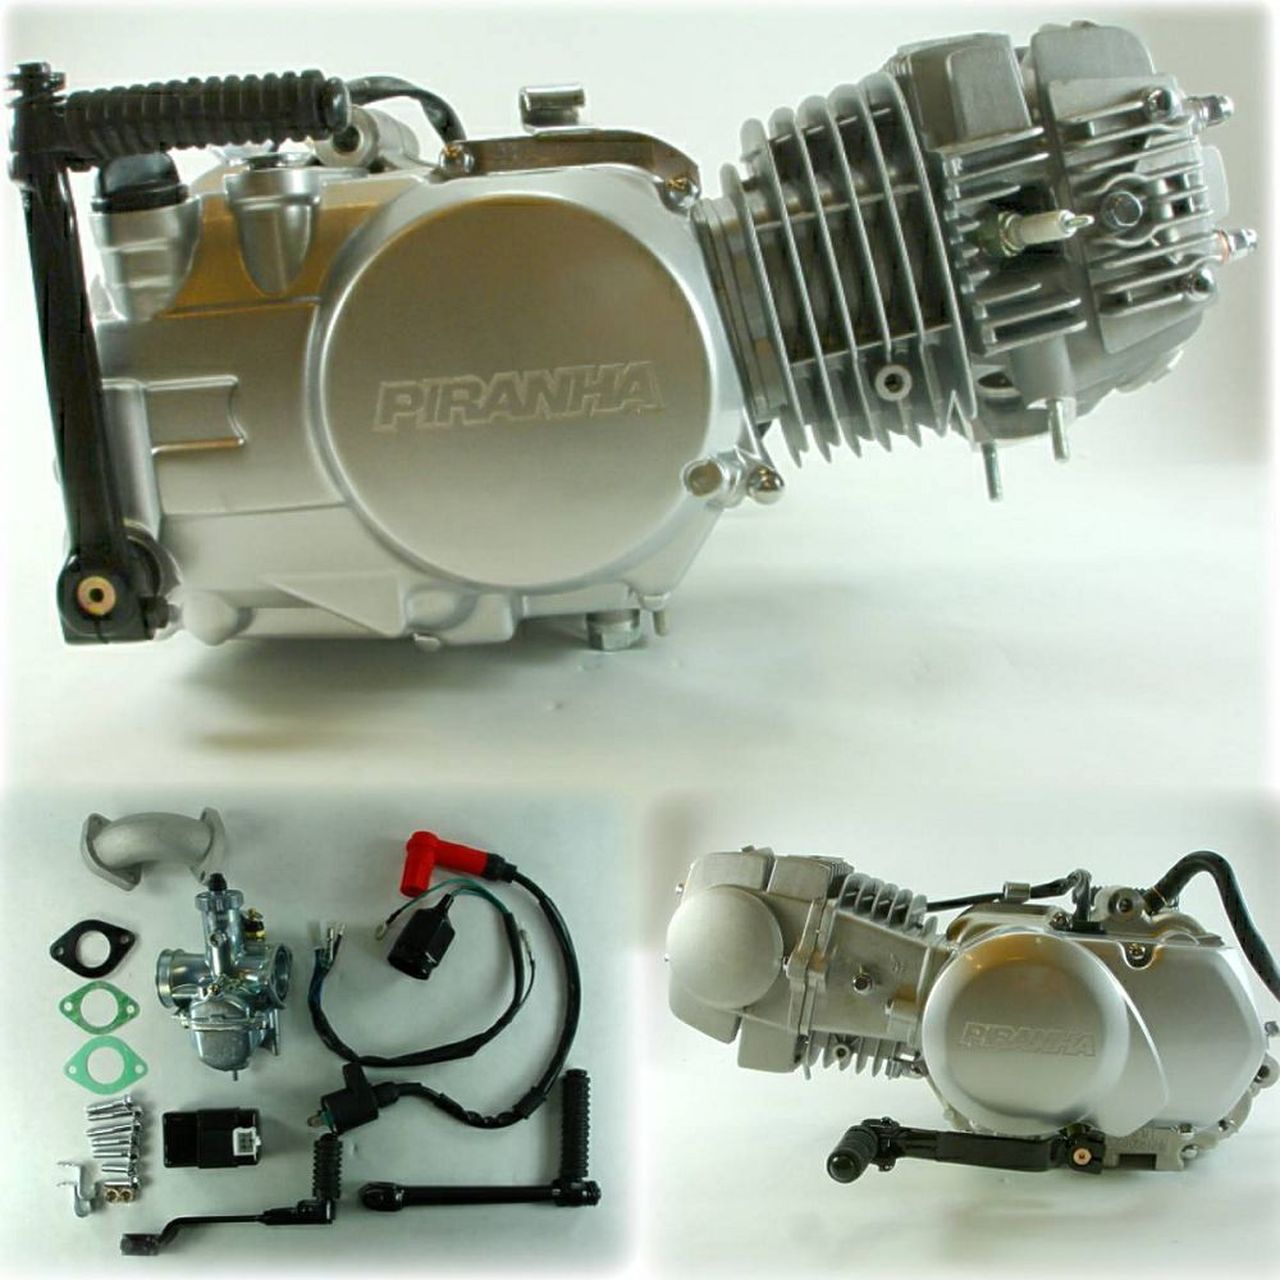 Piranha 125cc engine